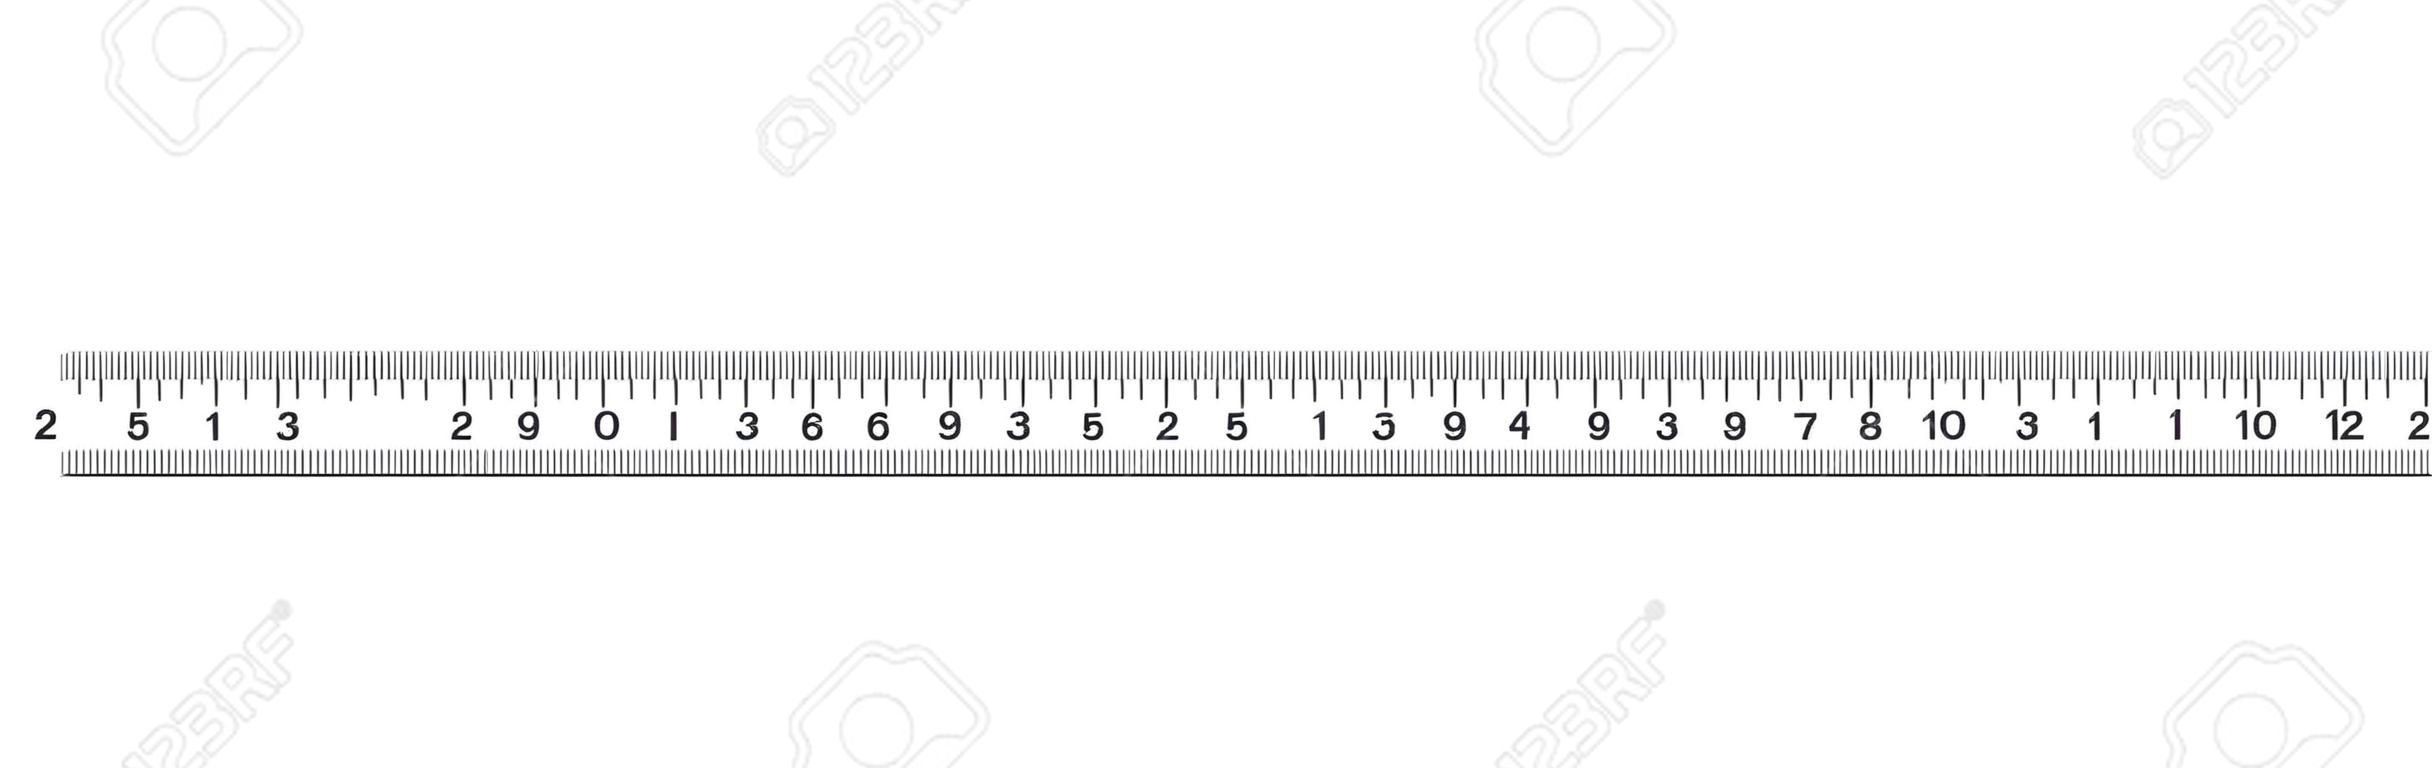 Ruler 20 cm. Measuring tool. Ruler Graduation. Ruler grid 20 and 1 cm. Size indicator units. Metric Centimeter size indicators. Vector EPS10